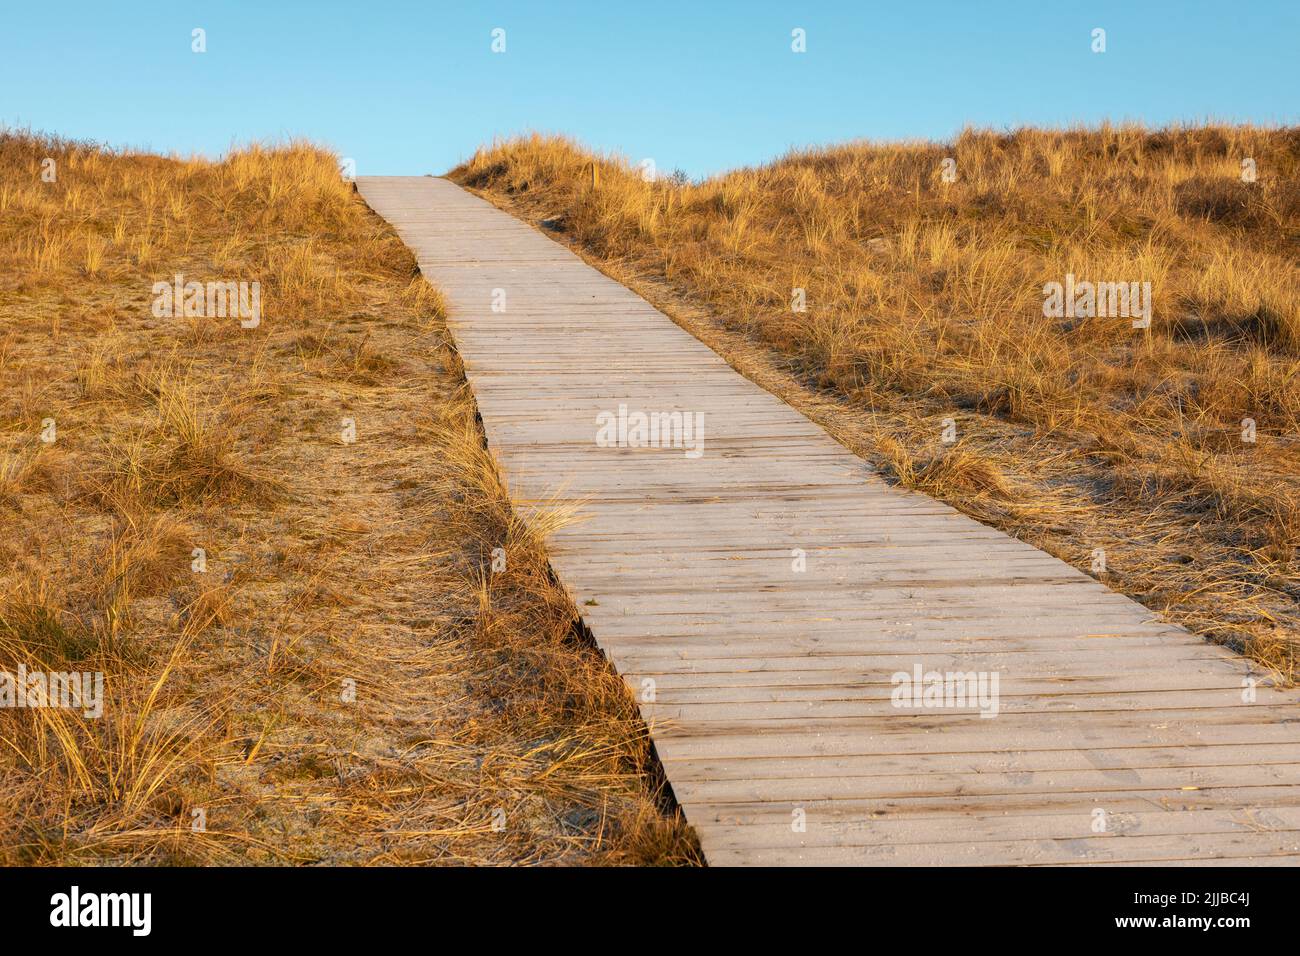 Boardwalk through the dunes, Spiekeroog, Germany Stock Photo